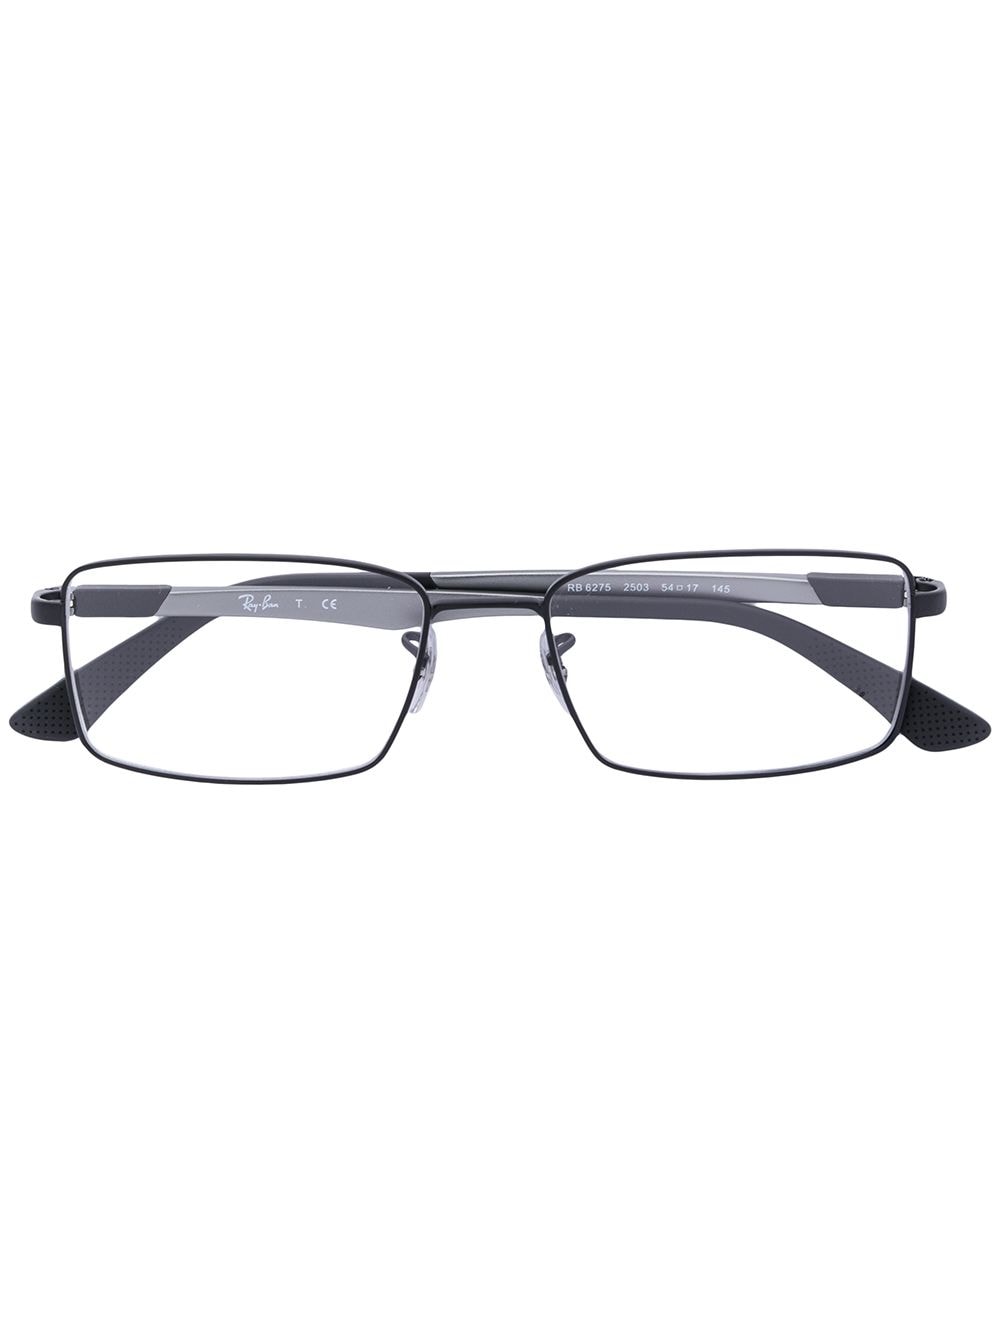 Ray-Ban square glasses - Black von Ray-Ban